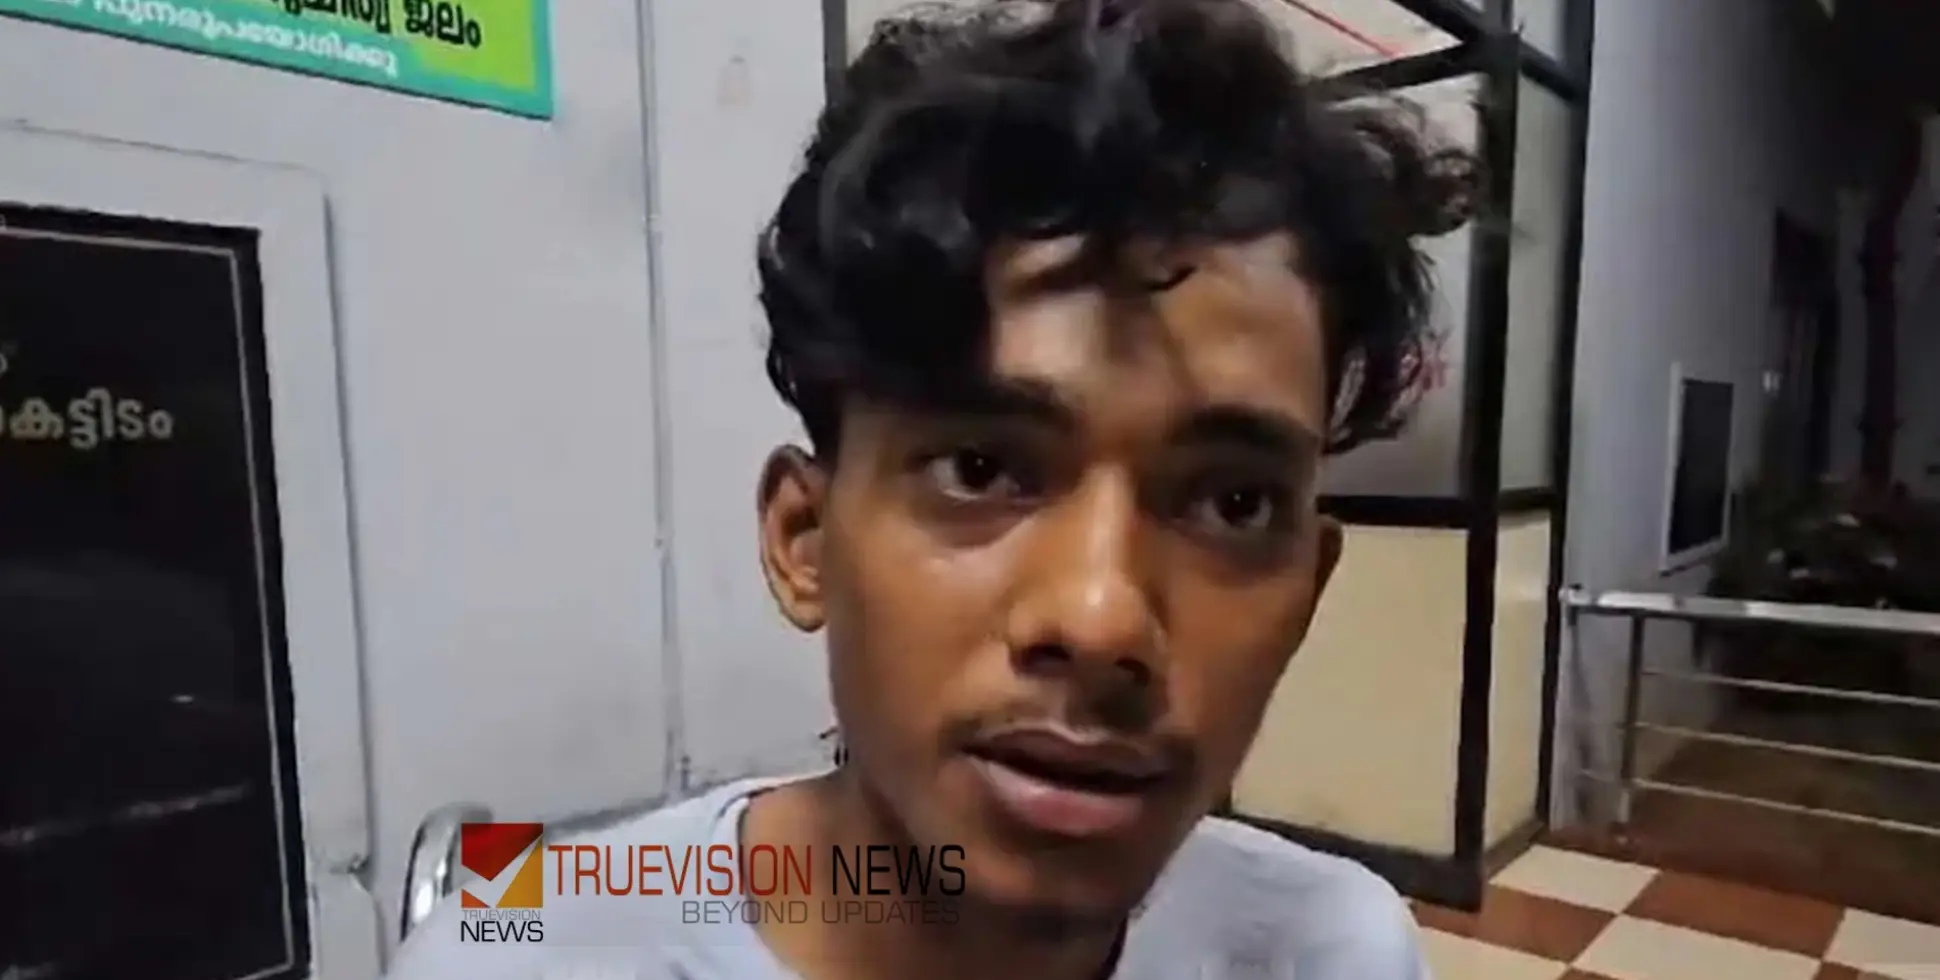 #arrest | കോഴിക്കോട് 19-കാരനായ അതിഥിത്തൊഴിലാളിയെ ജോലിക്കെന്ന് പറഞ്ഞ് കൊണ്ടുപോയി, തോക്ക് ചൂണ്ടി ബന്ദിയാക്കി; യുവാവ് പിടിയിൽ 